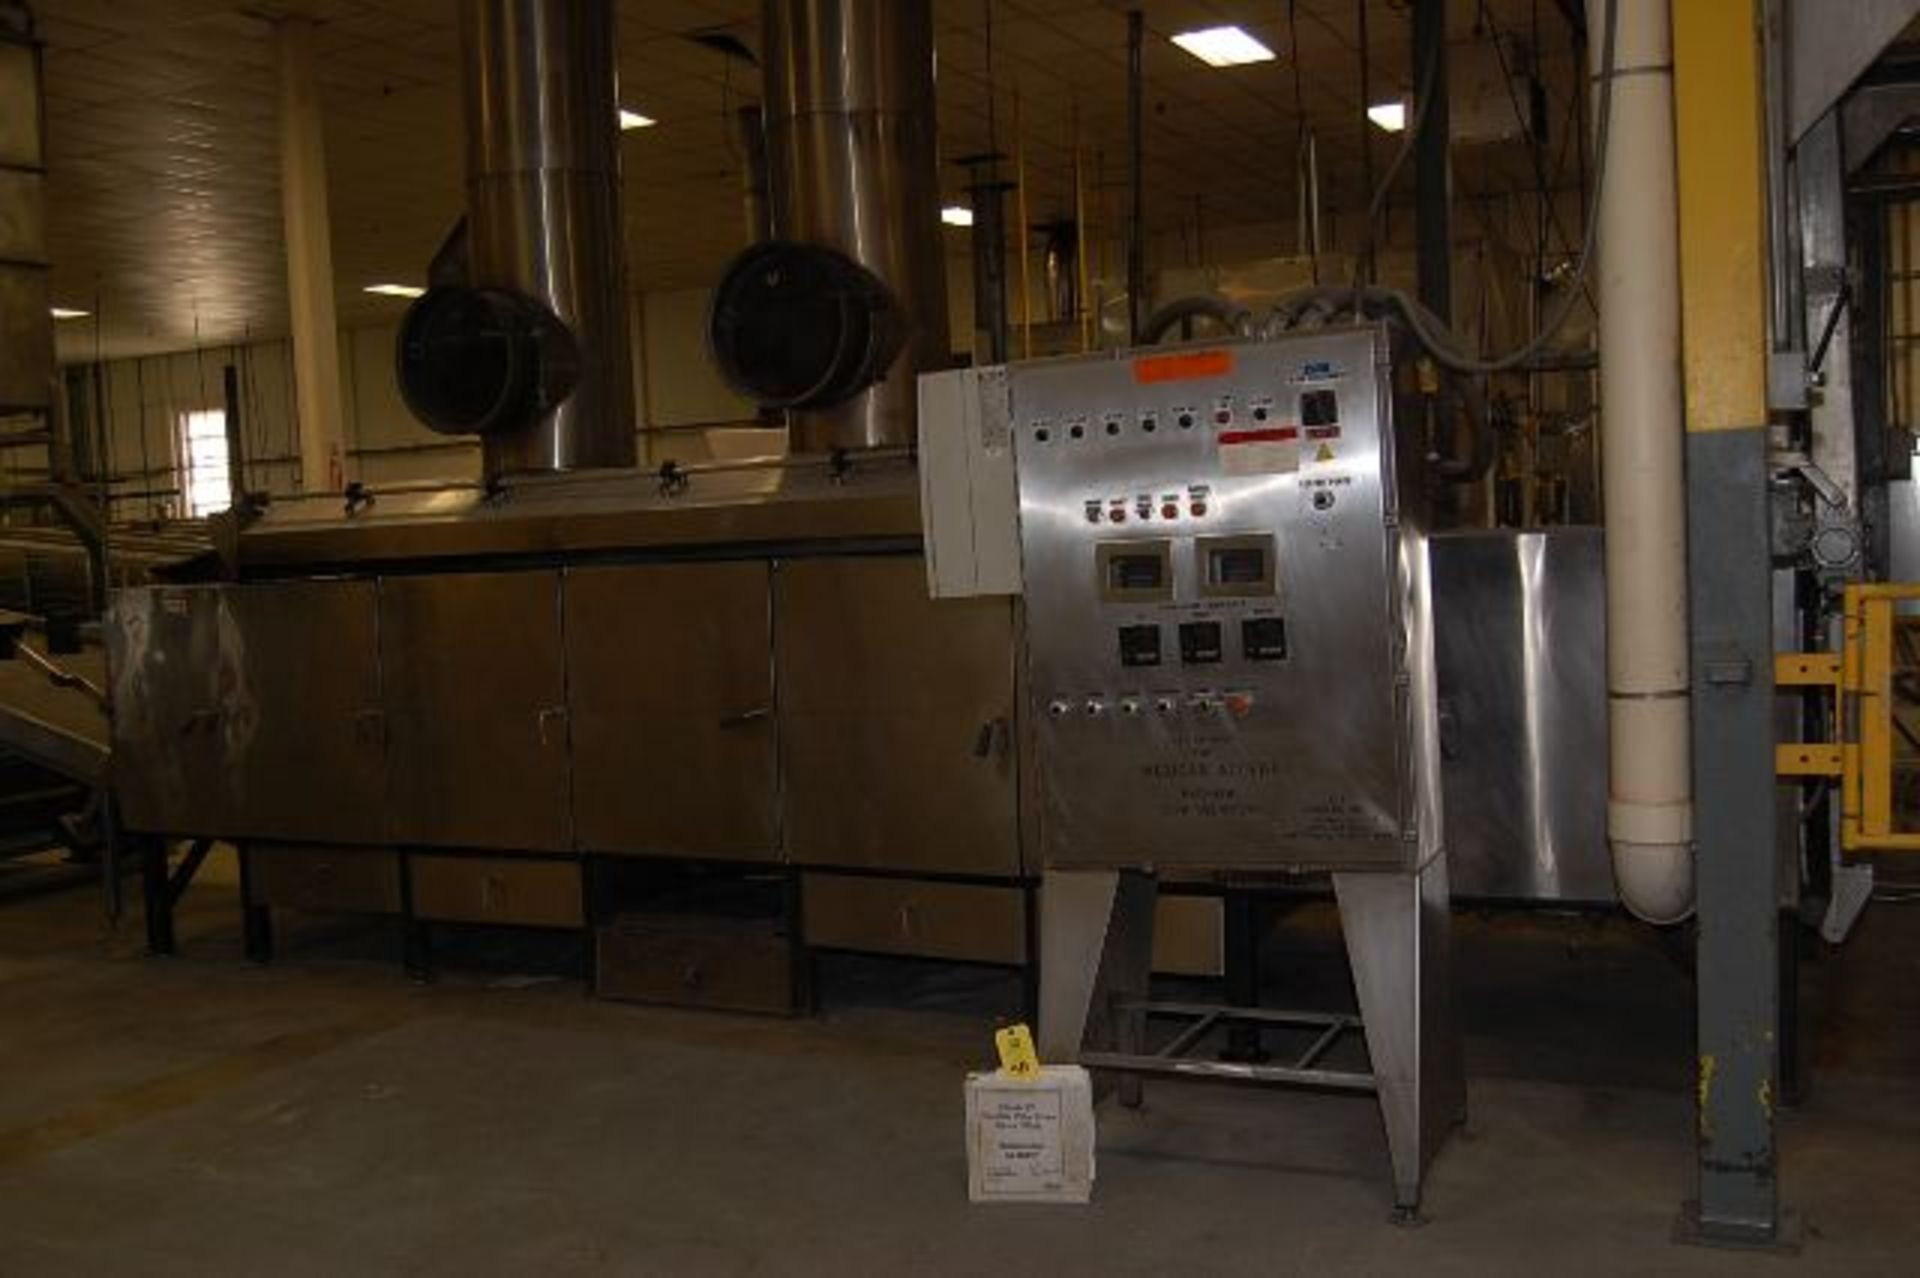 Casa Herrera Model #4XW Tortilla Chip Oven, SS Construction, Serial #0504EP076, RIGGING FEE: $3000